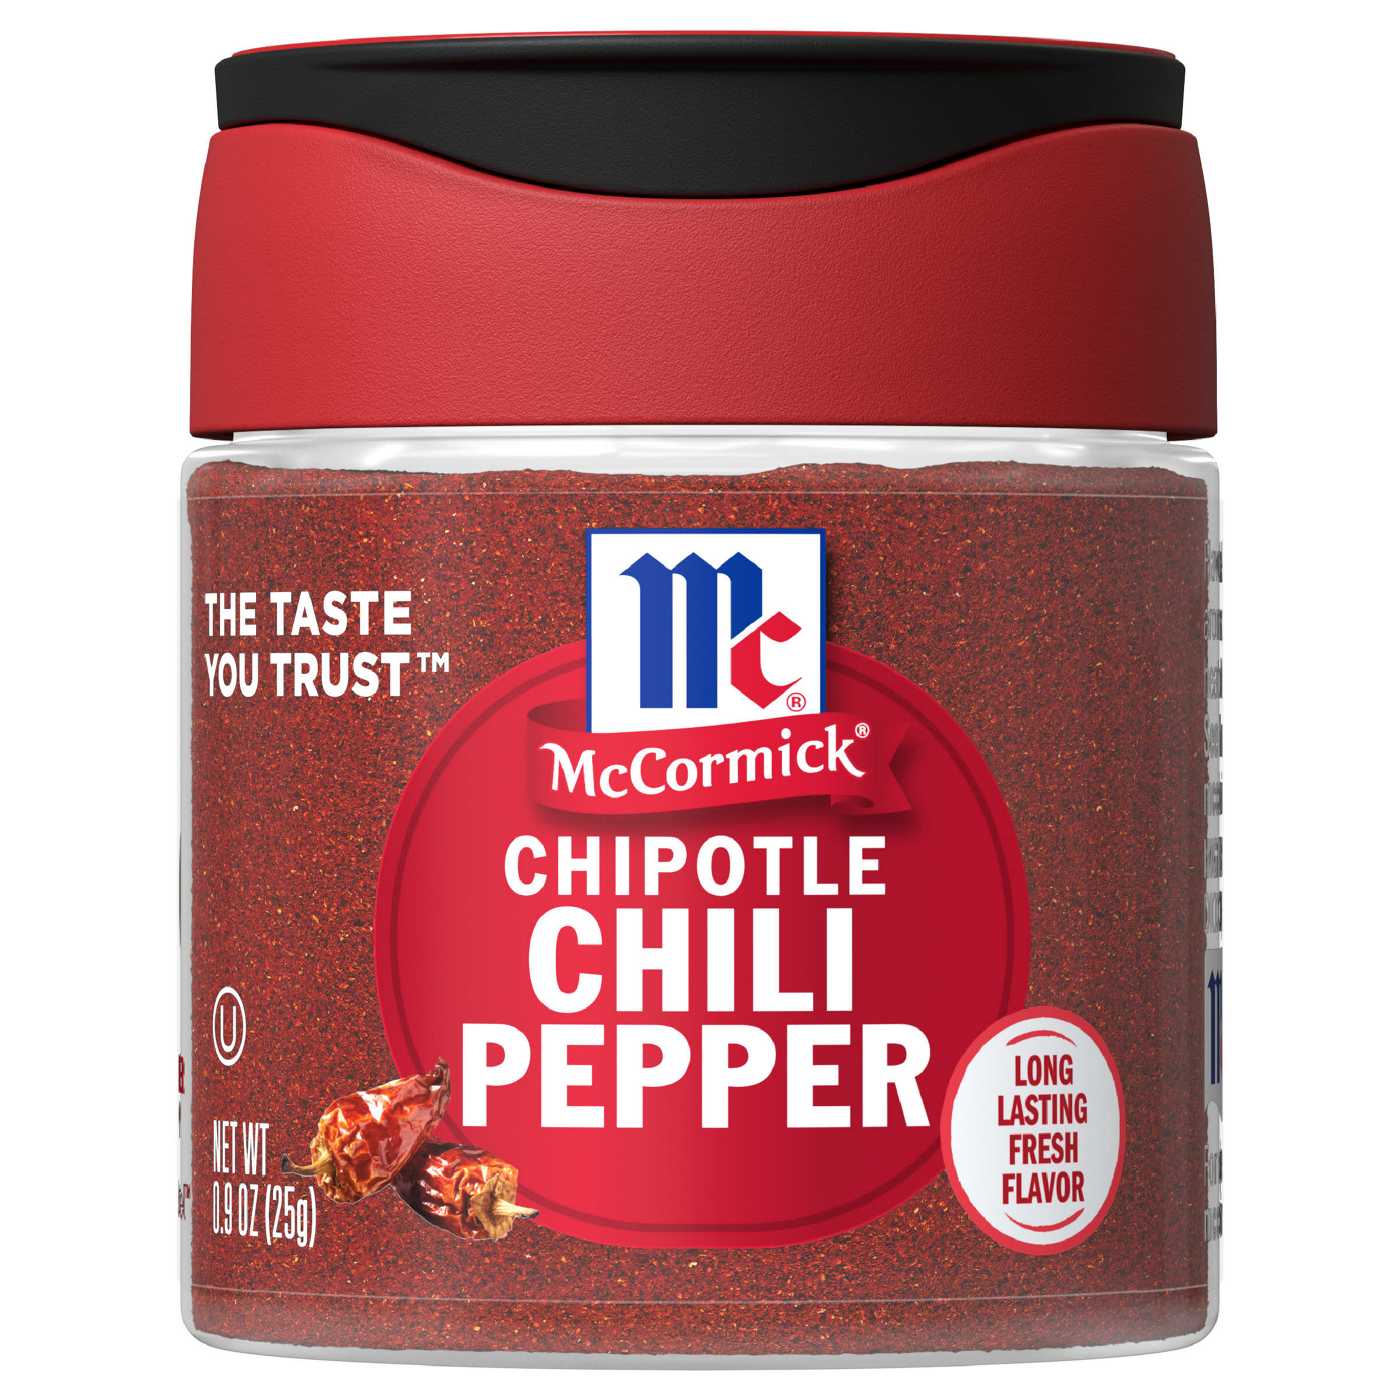 McCormick Chipotle Chili Pepper; image 1 of 8